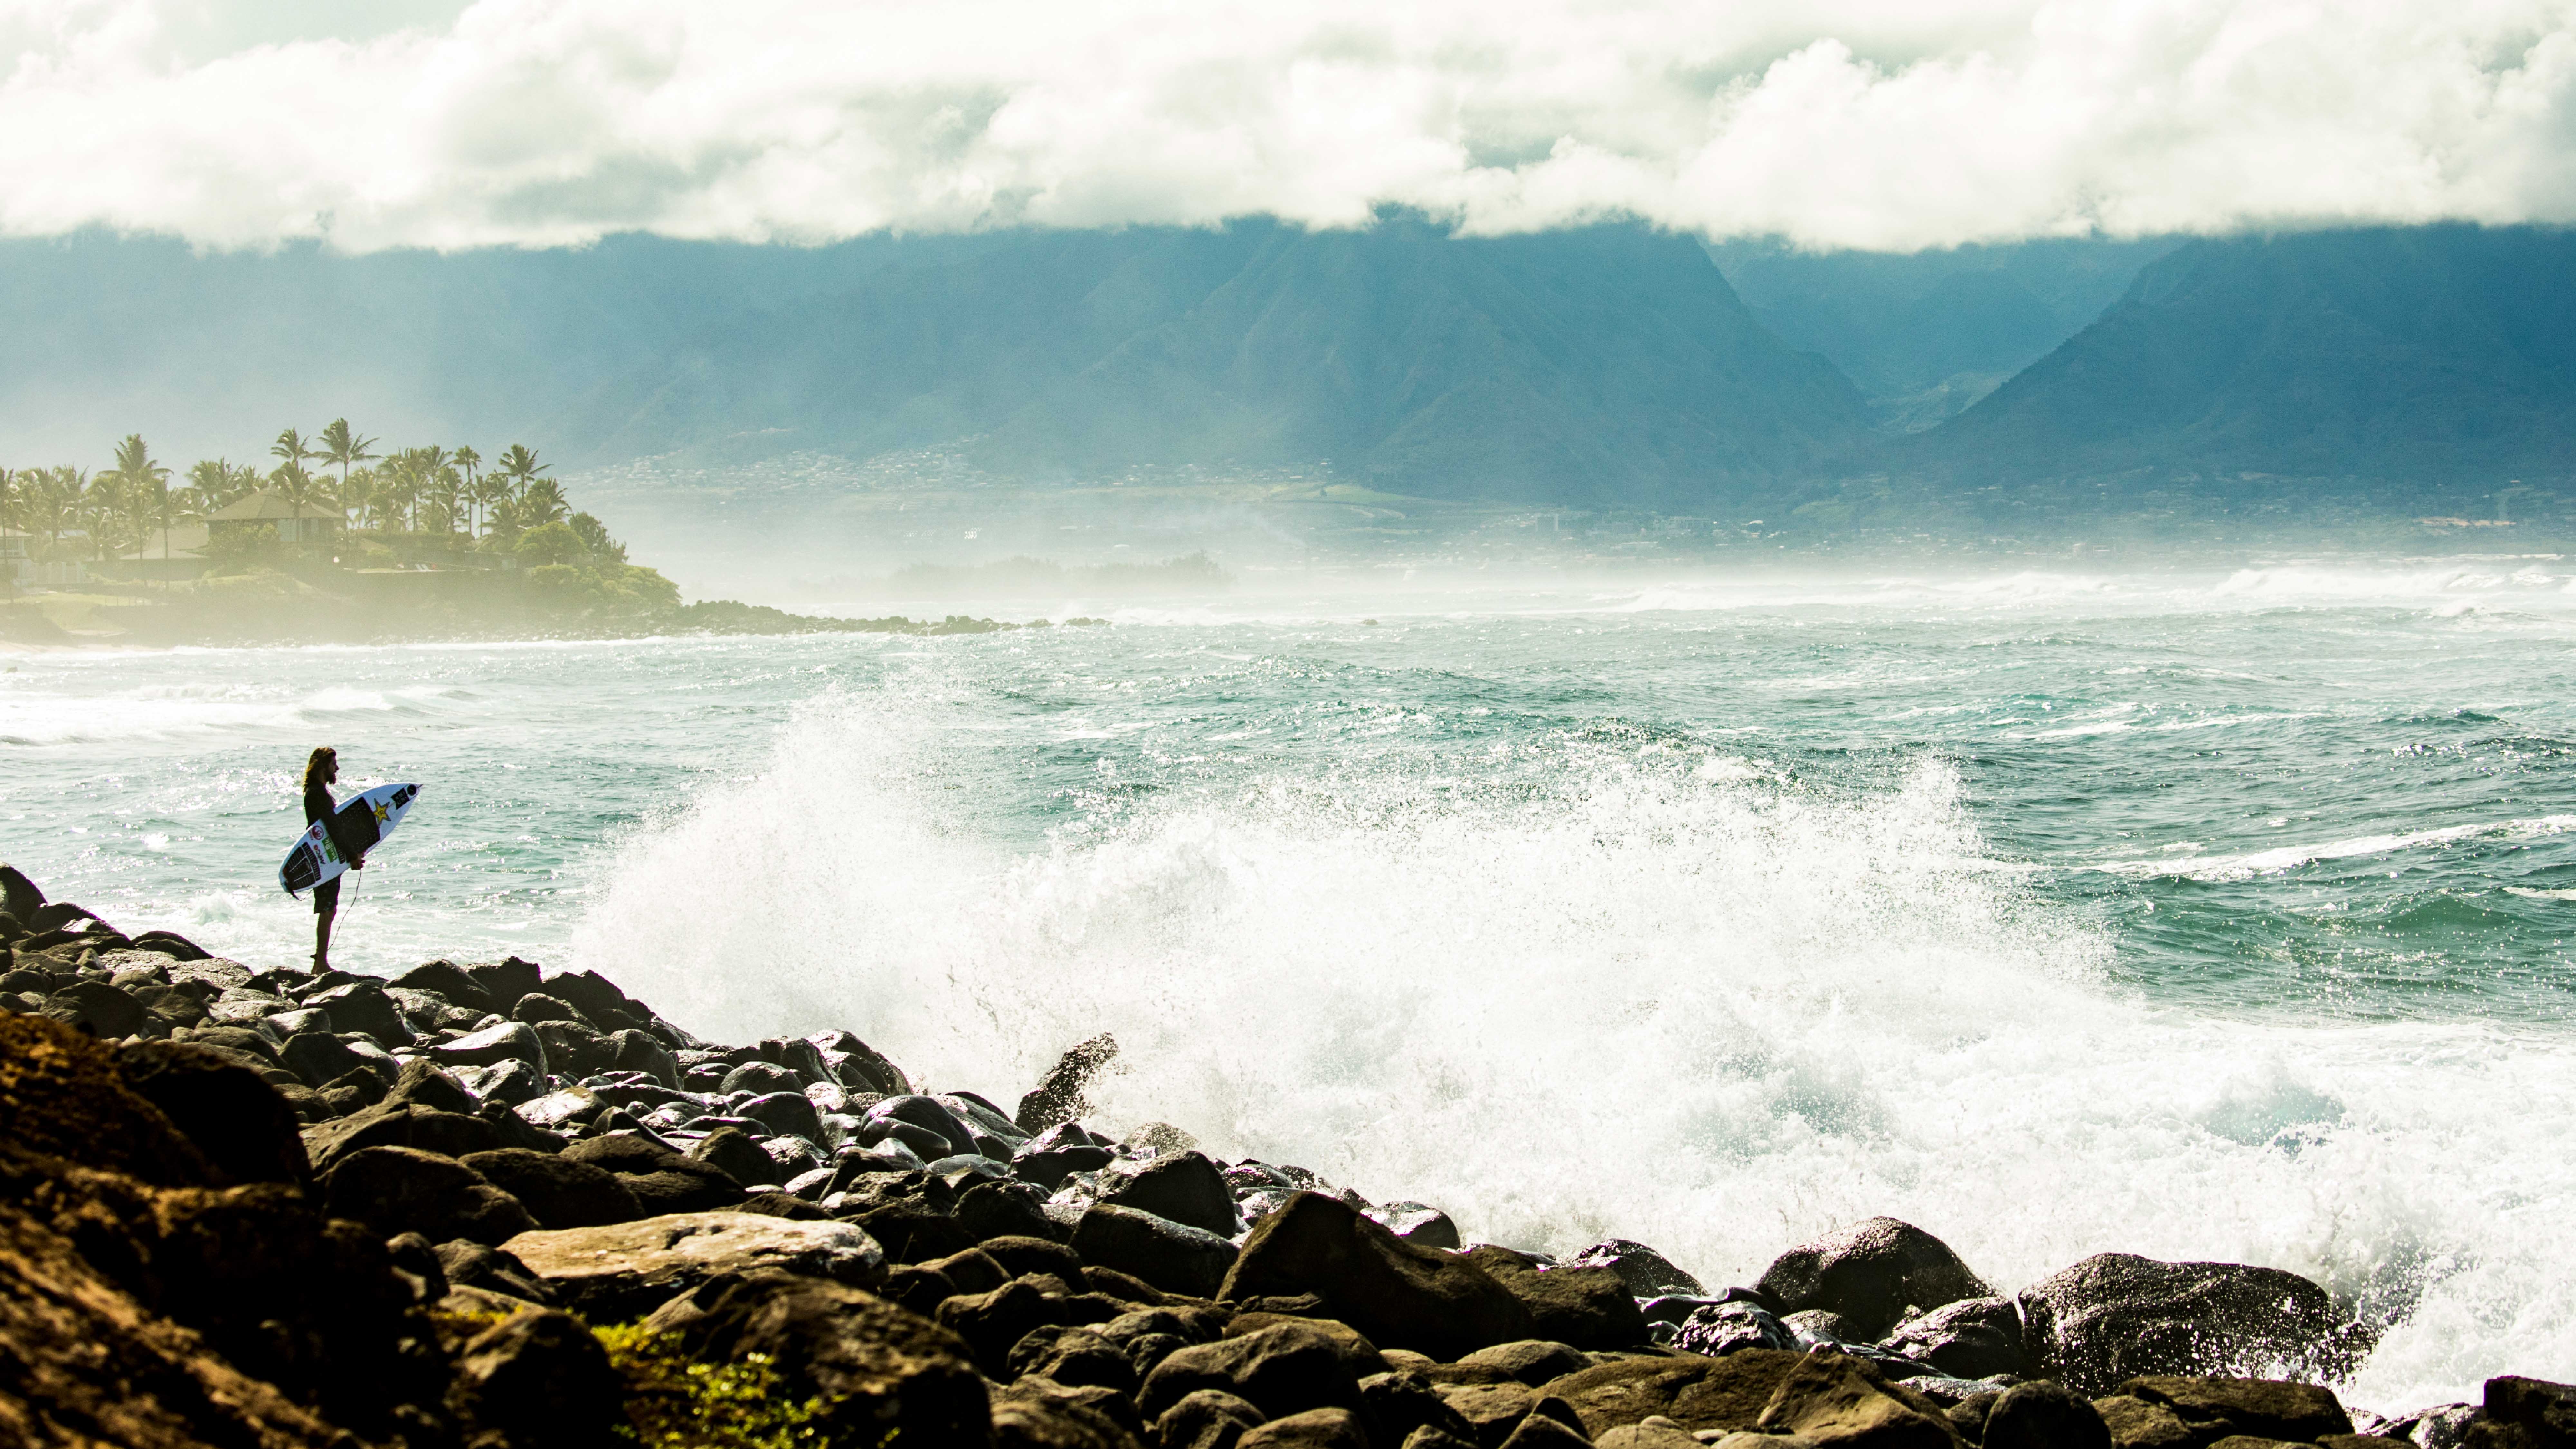 surfer standing on rock point overlooking ocean waves